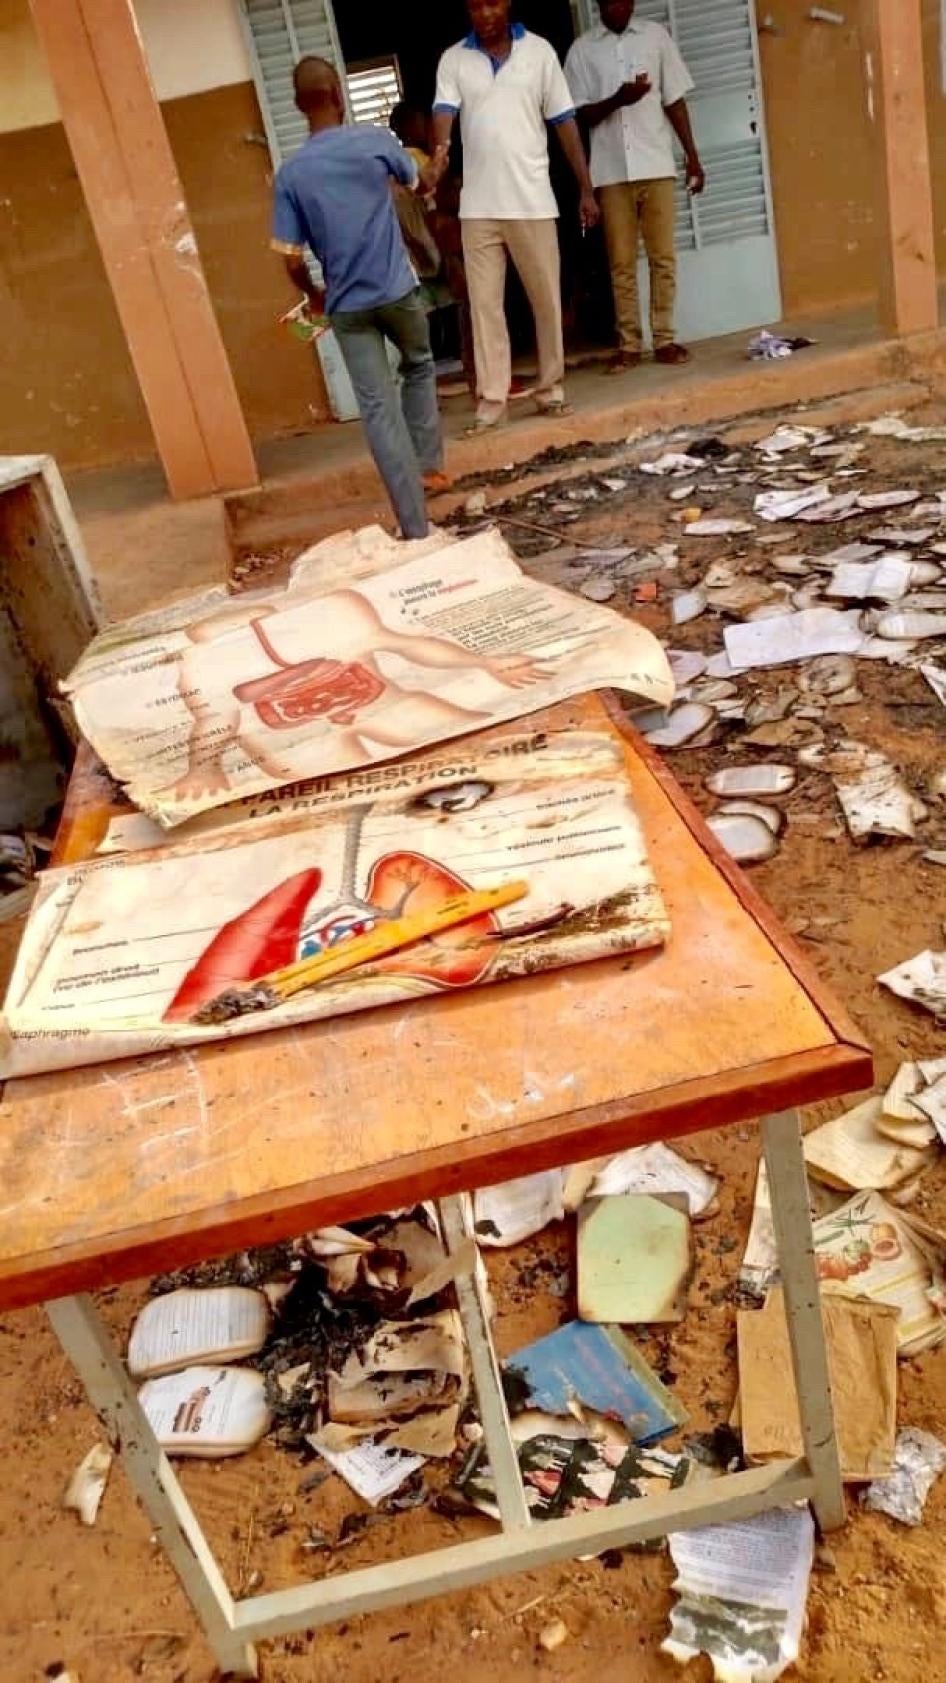 School desk with burned books